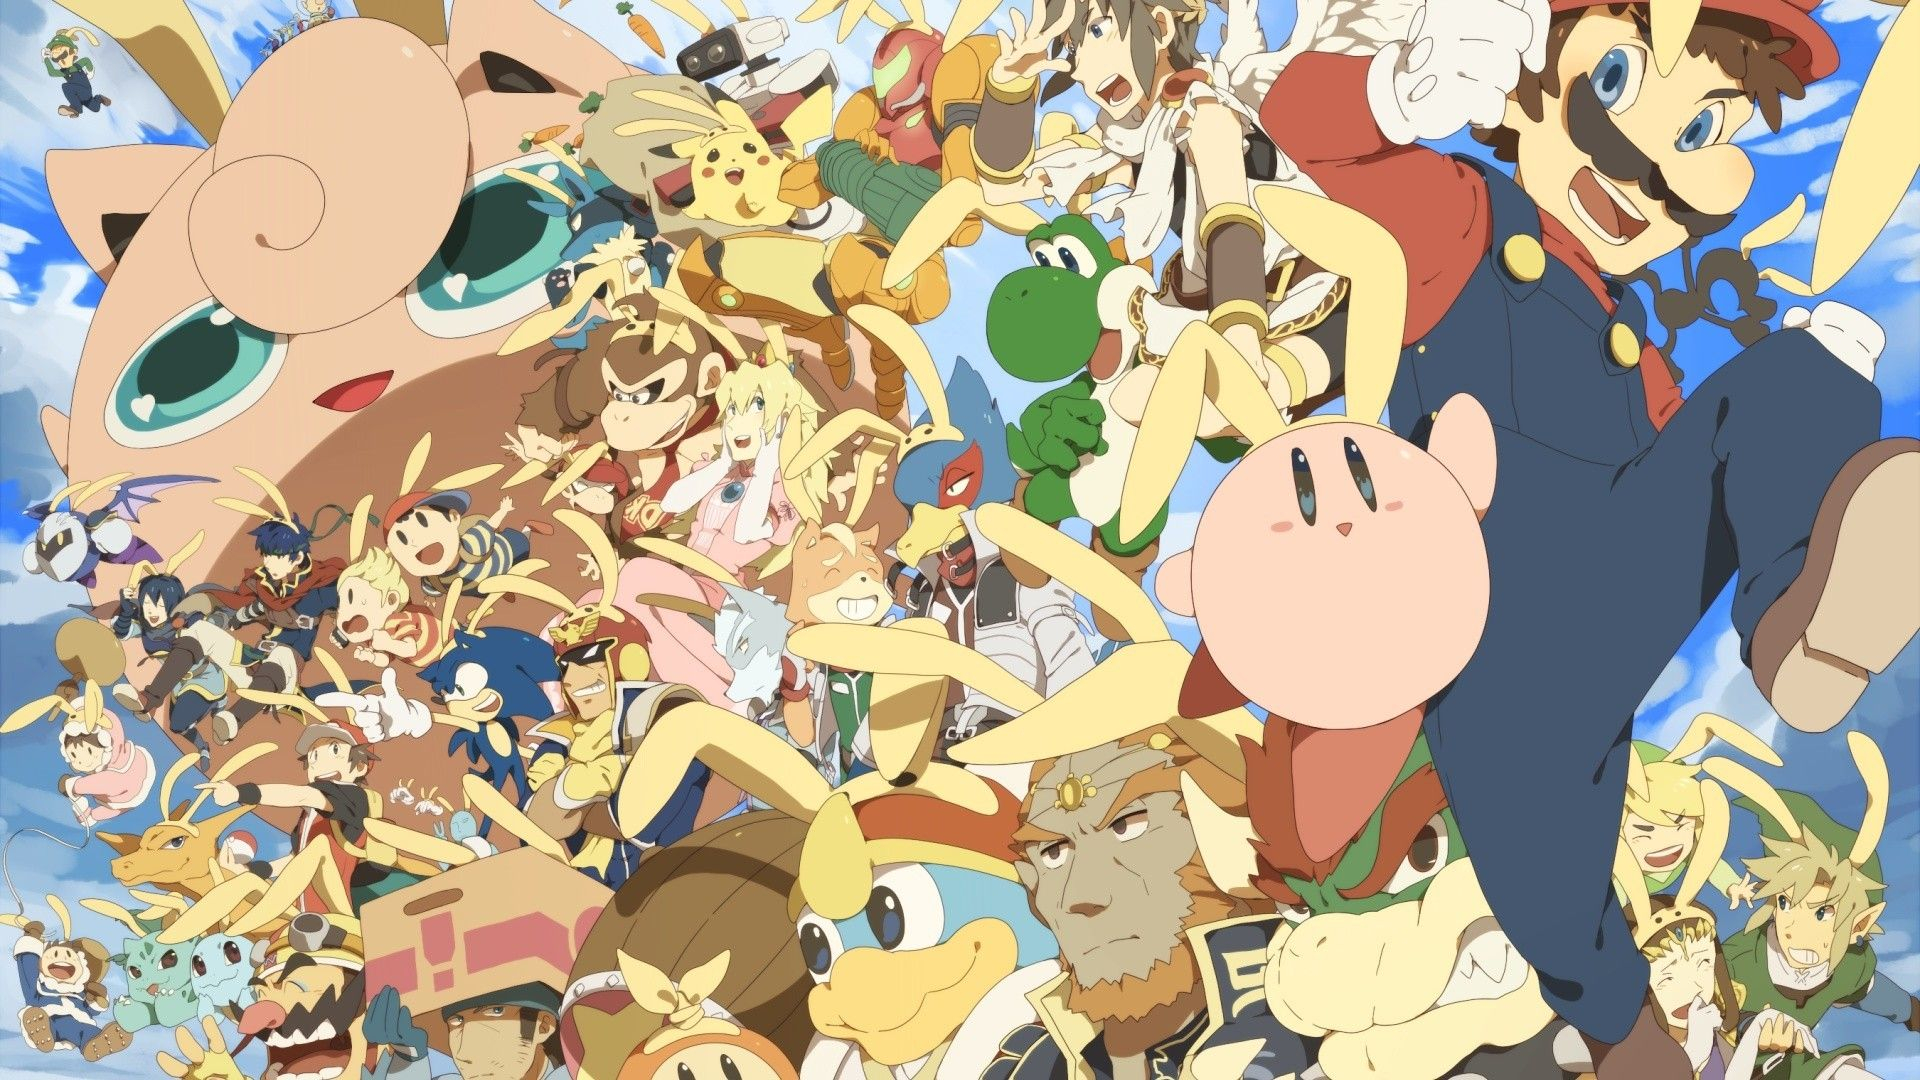 1920x1080 Anime Super Smash Bros. wallpaper | Digimon, Smash bros, Super smash bros